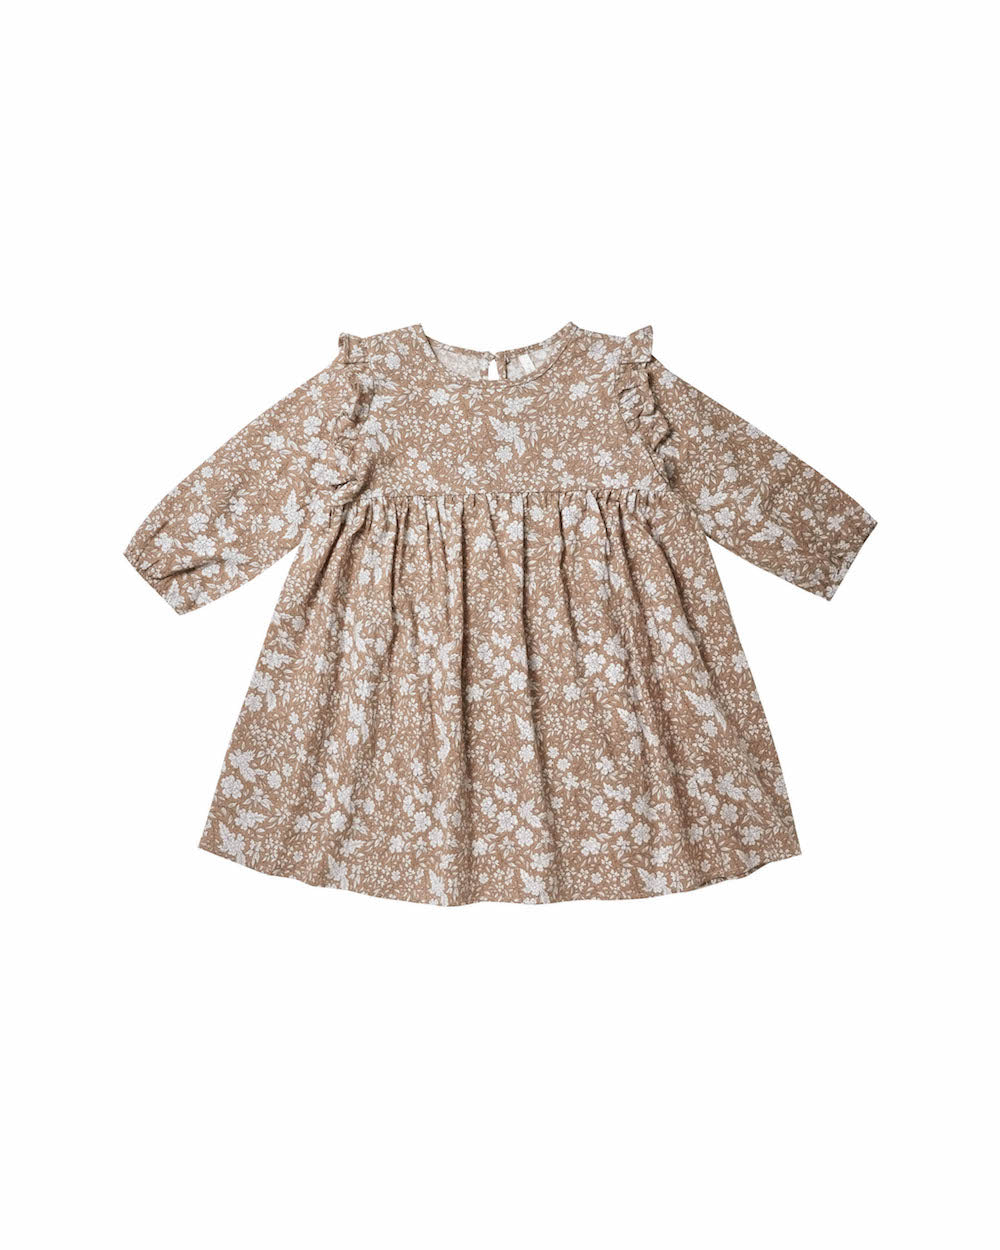 Rylee + Cru Piper Dress - Soft Floral